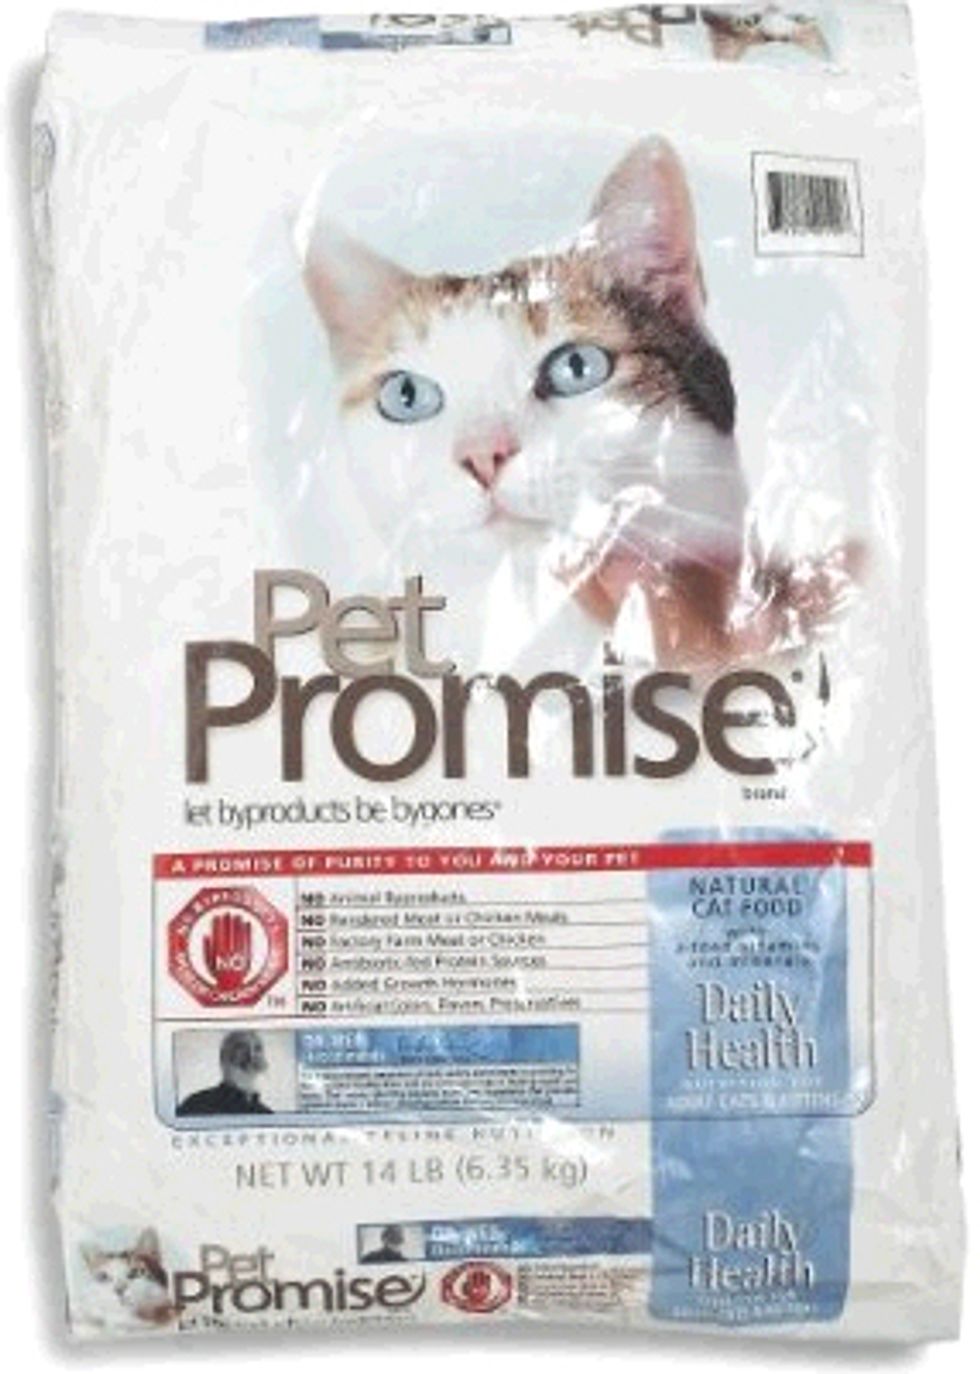 Review: Pet Promise Cat Food